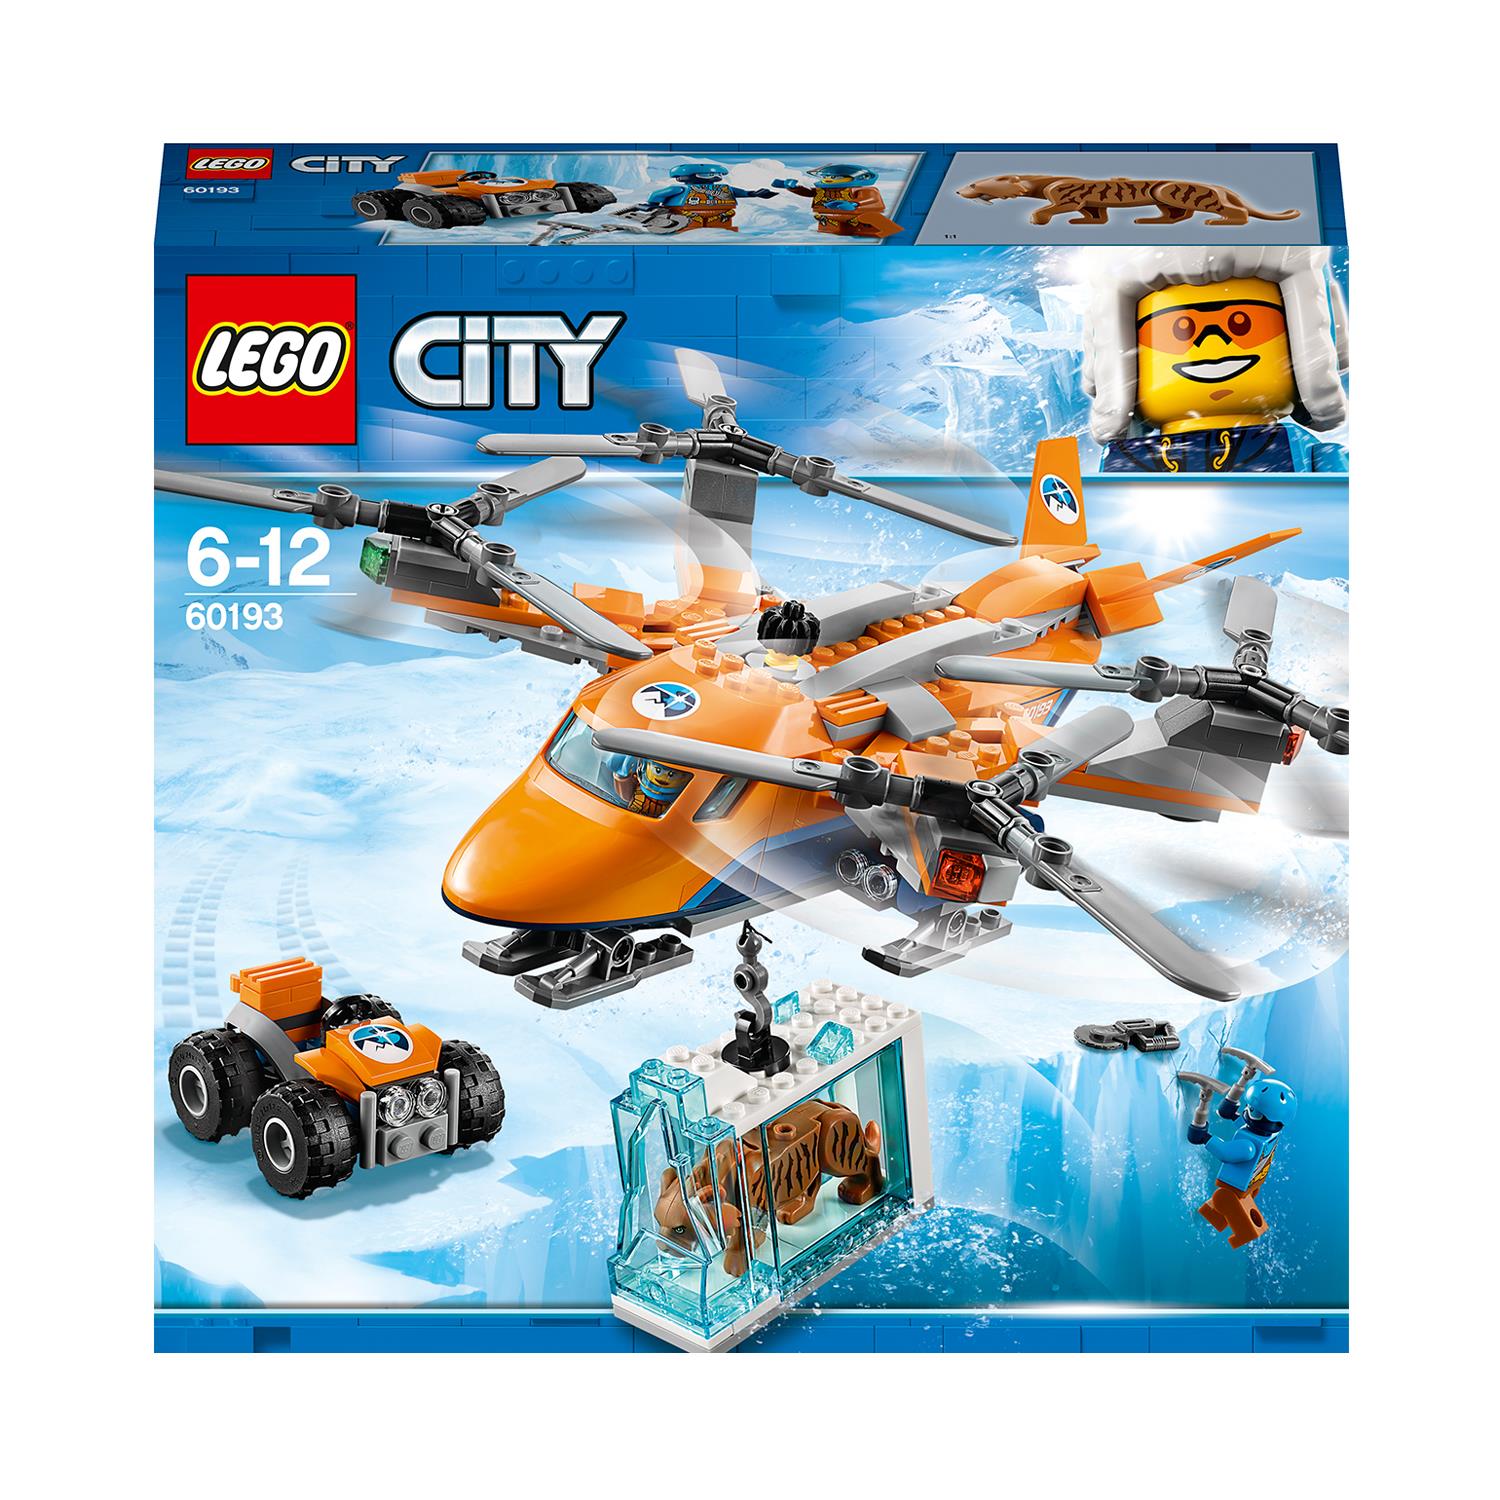 LEGO City Arctic Expedition